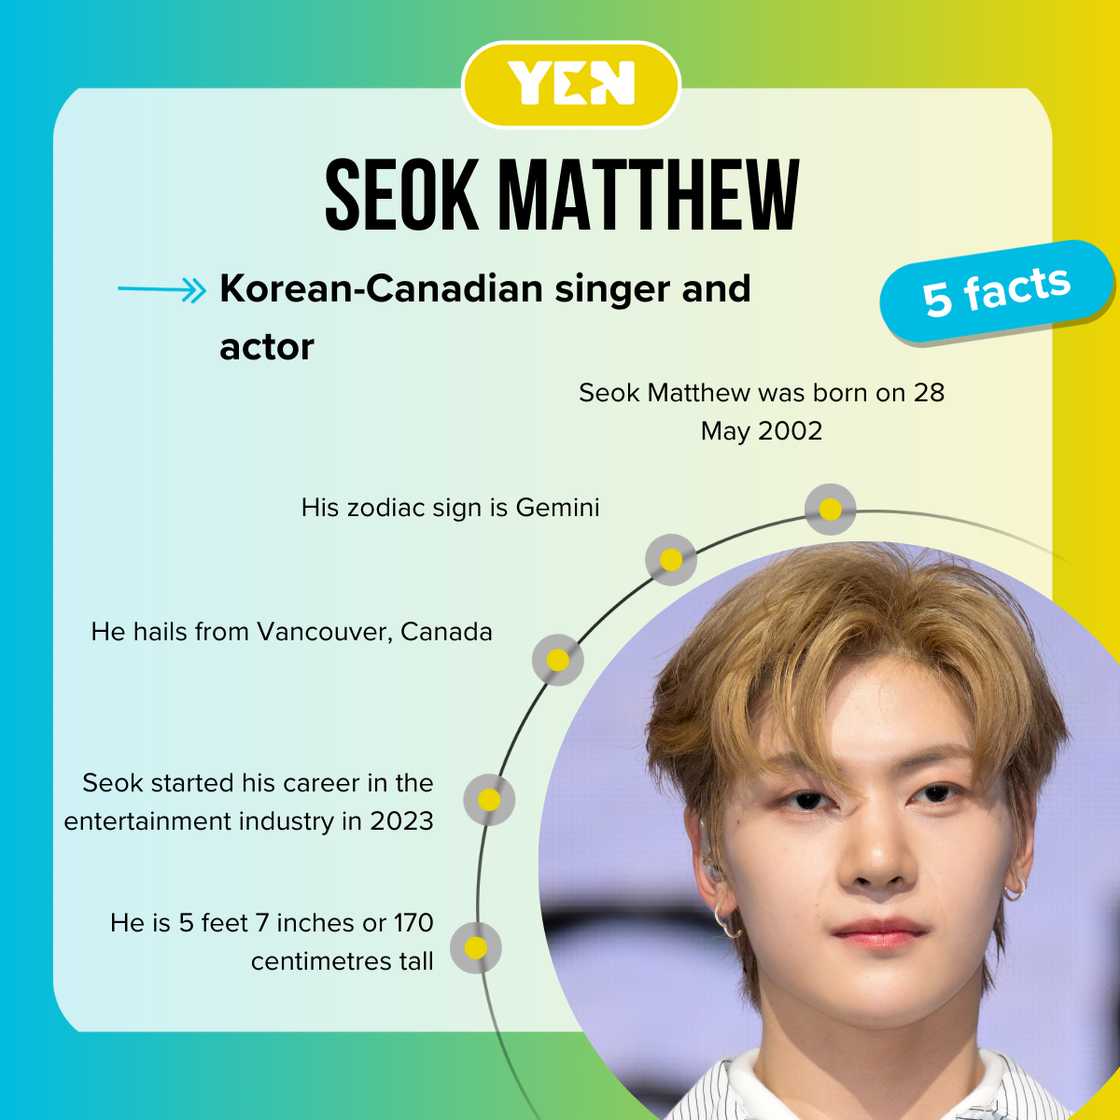 Facts about Seok Matthew